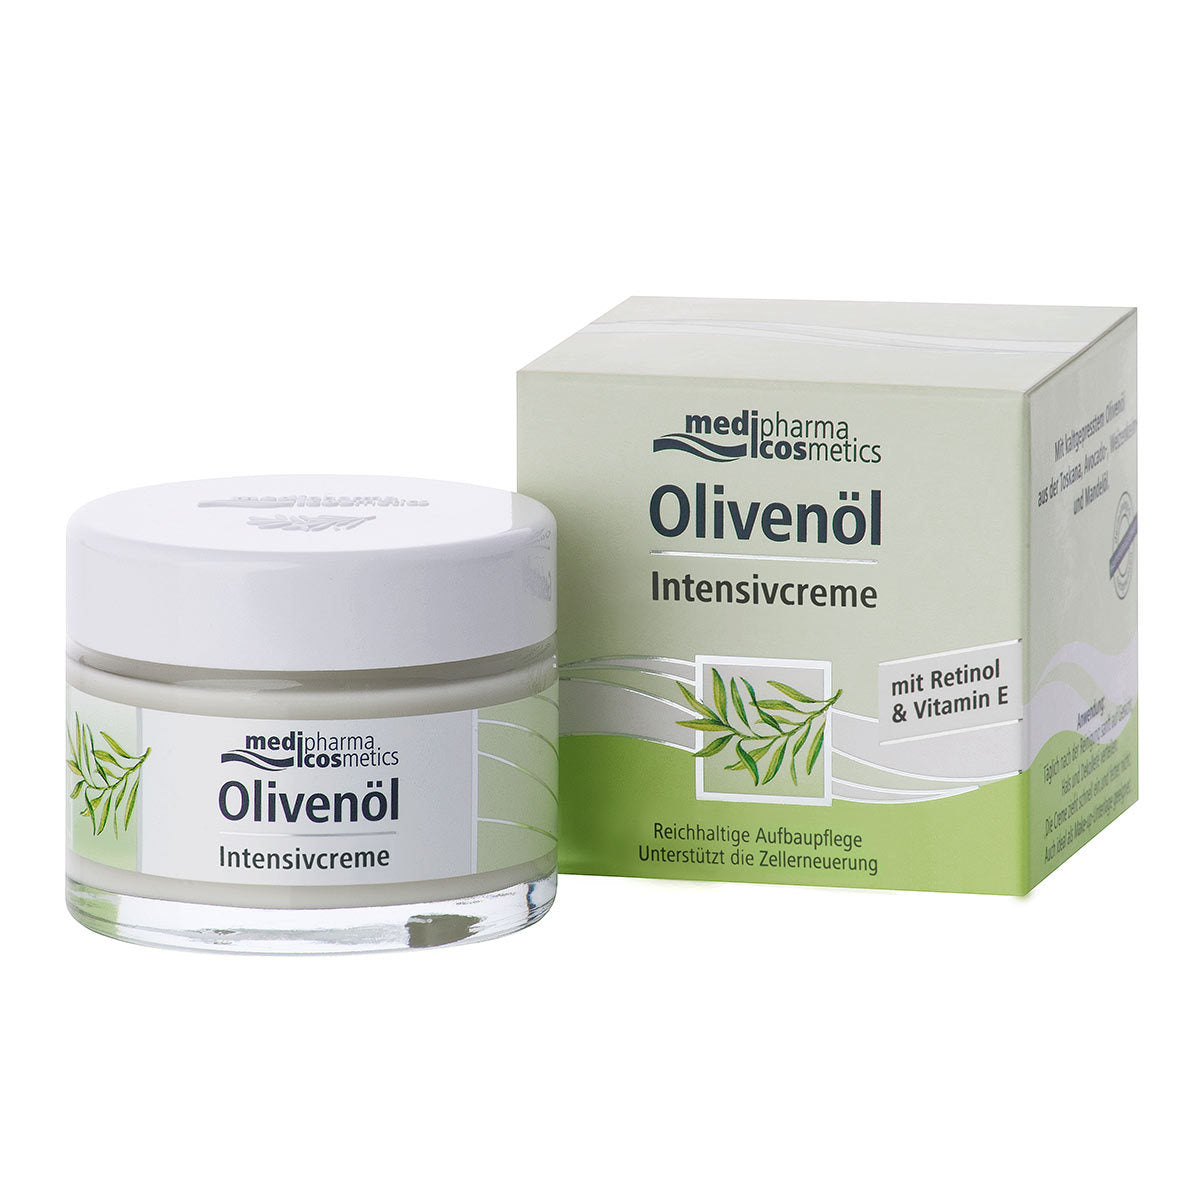 Alternate Image of Olivenol Intensivecreme